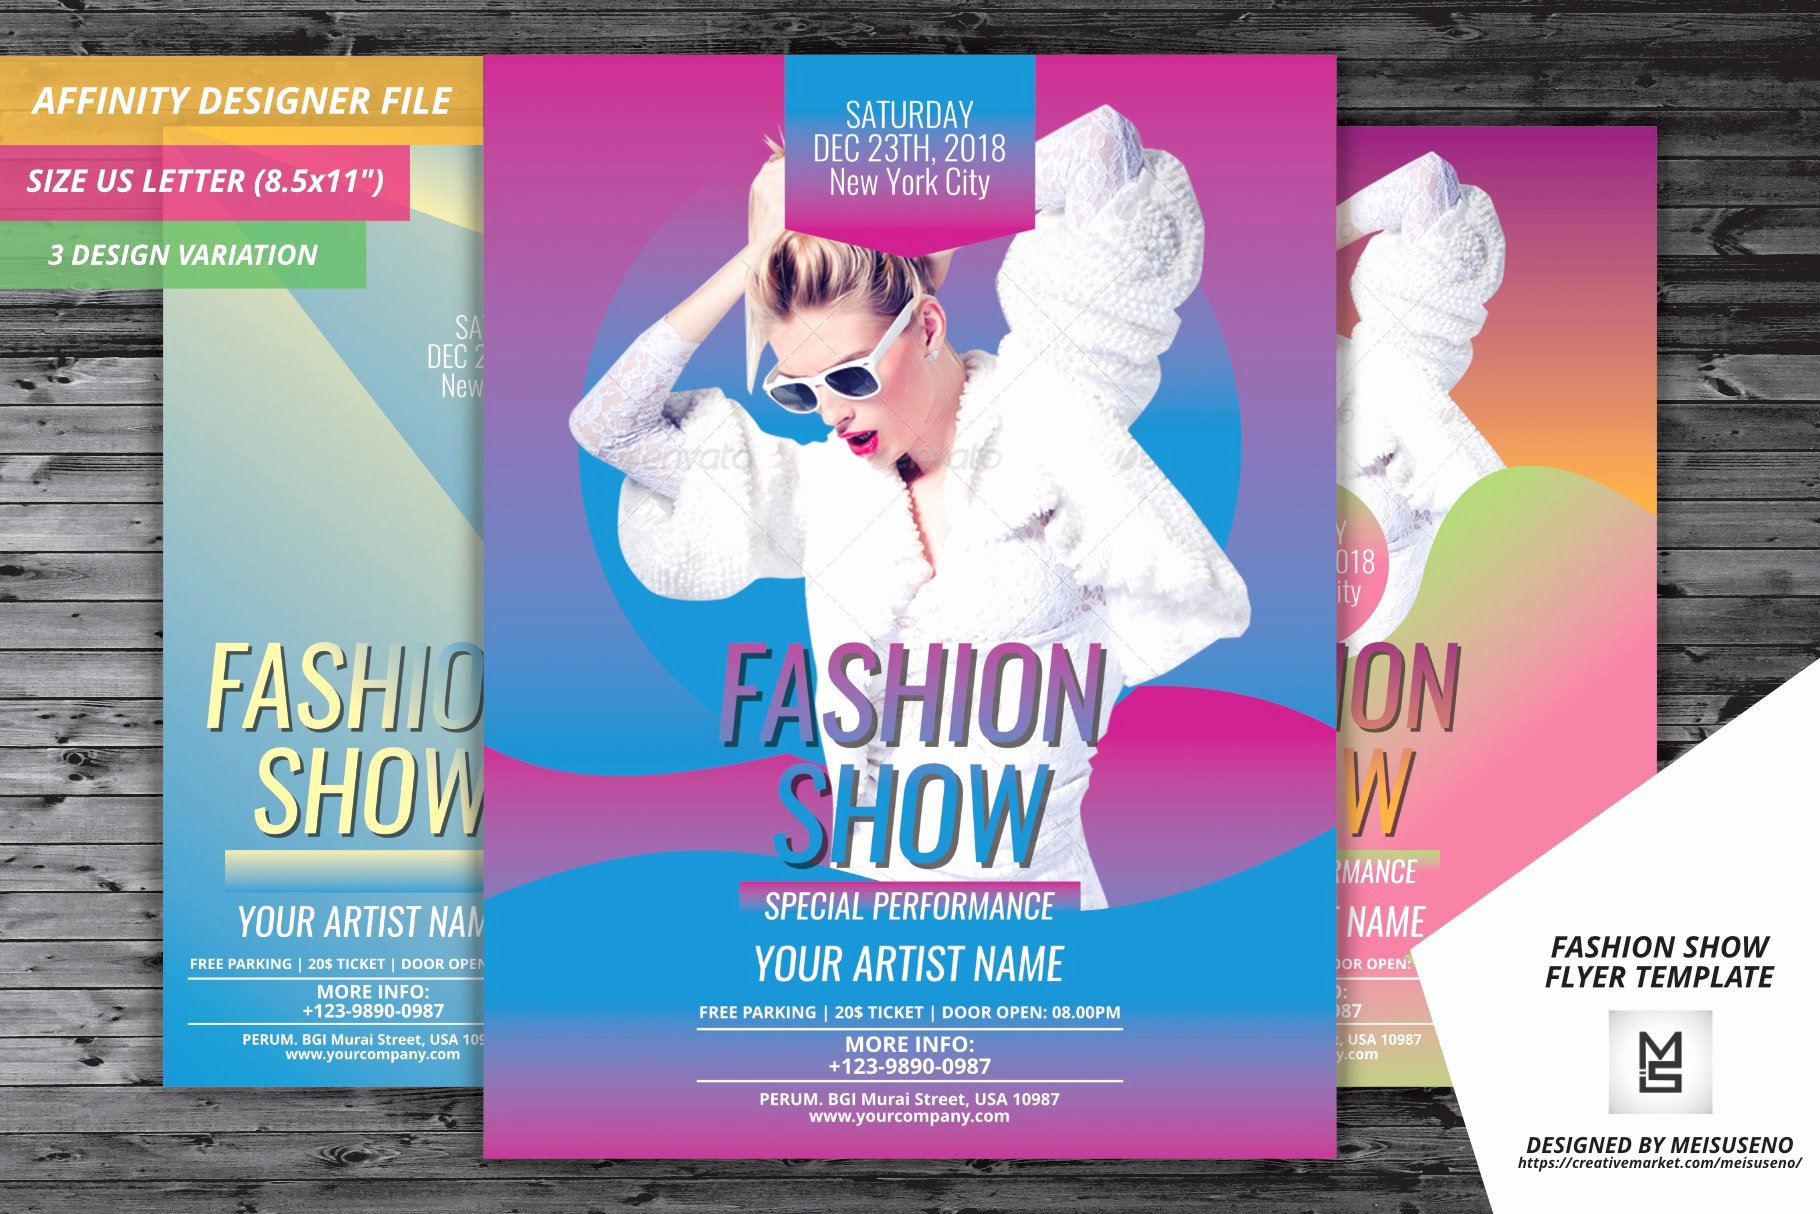 Fashion Show Flyer Template Free New Fashion Show Flyer Template Flyer Templates Creative